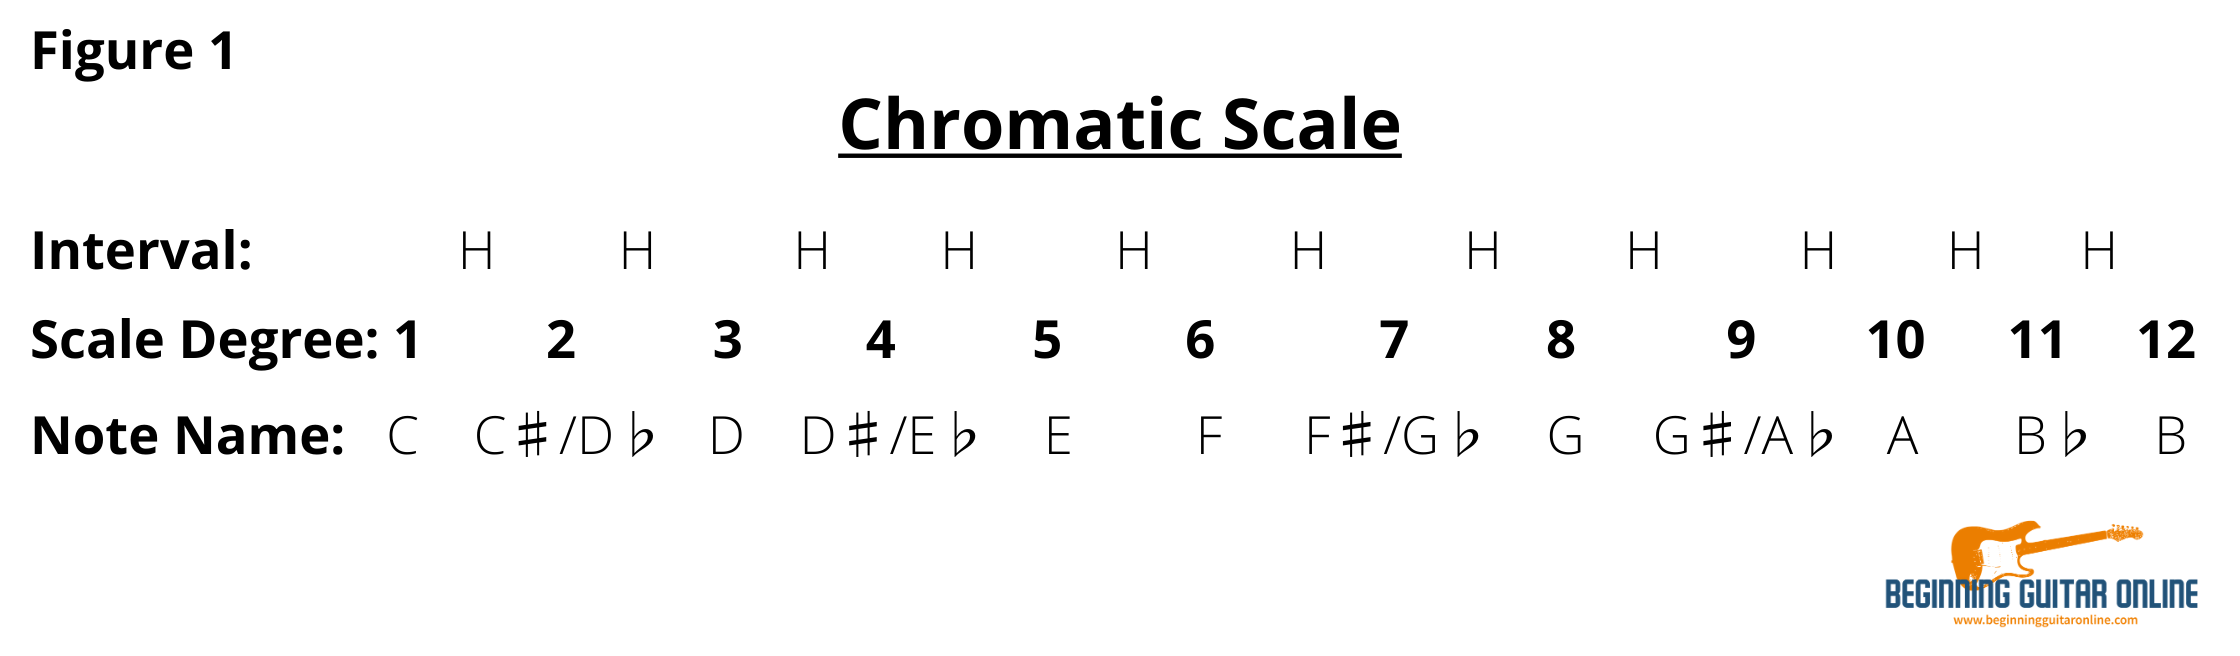 chromatic-scale-music-theory-bgo